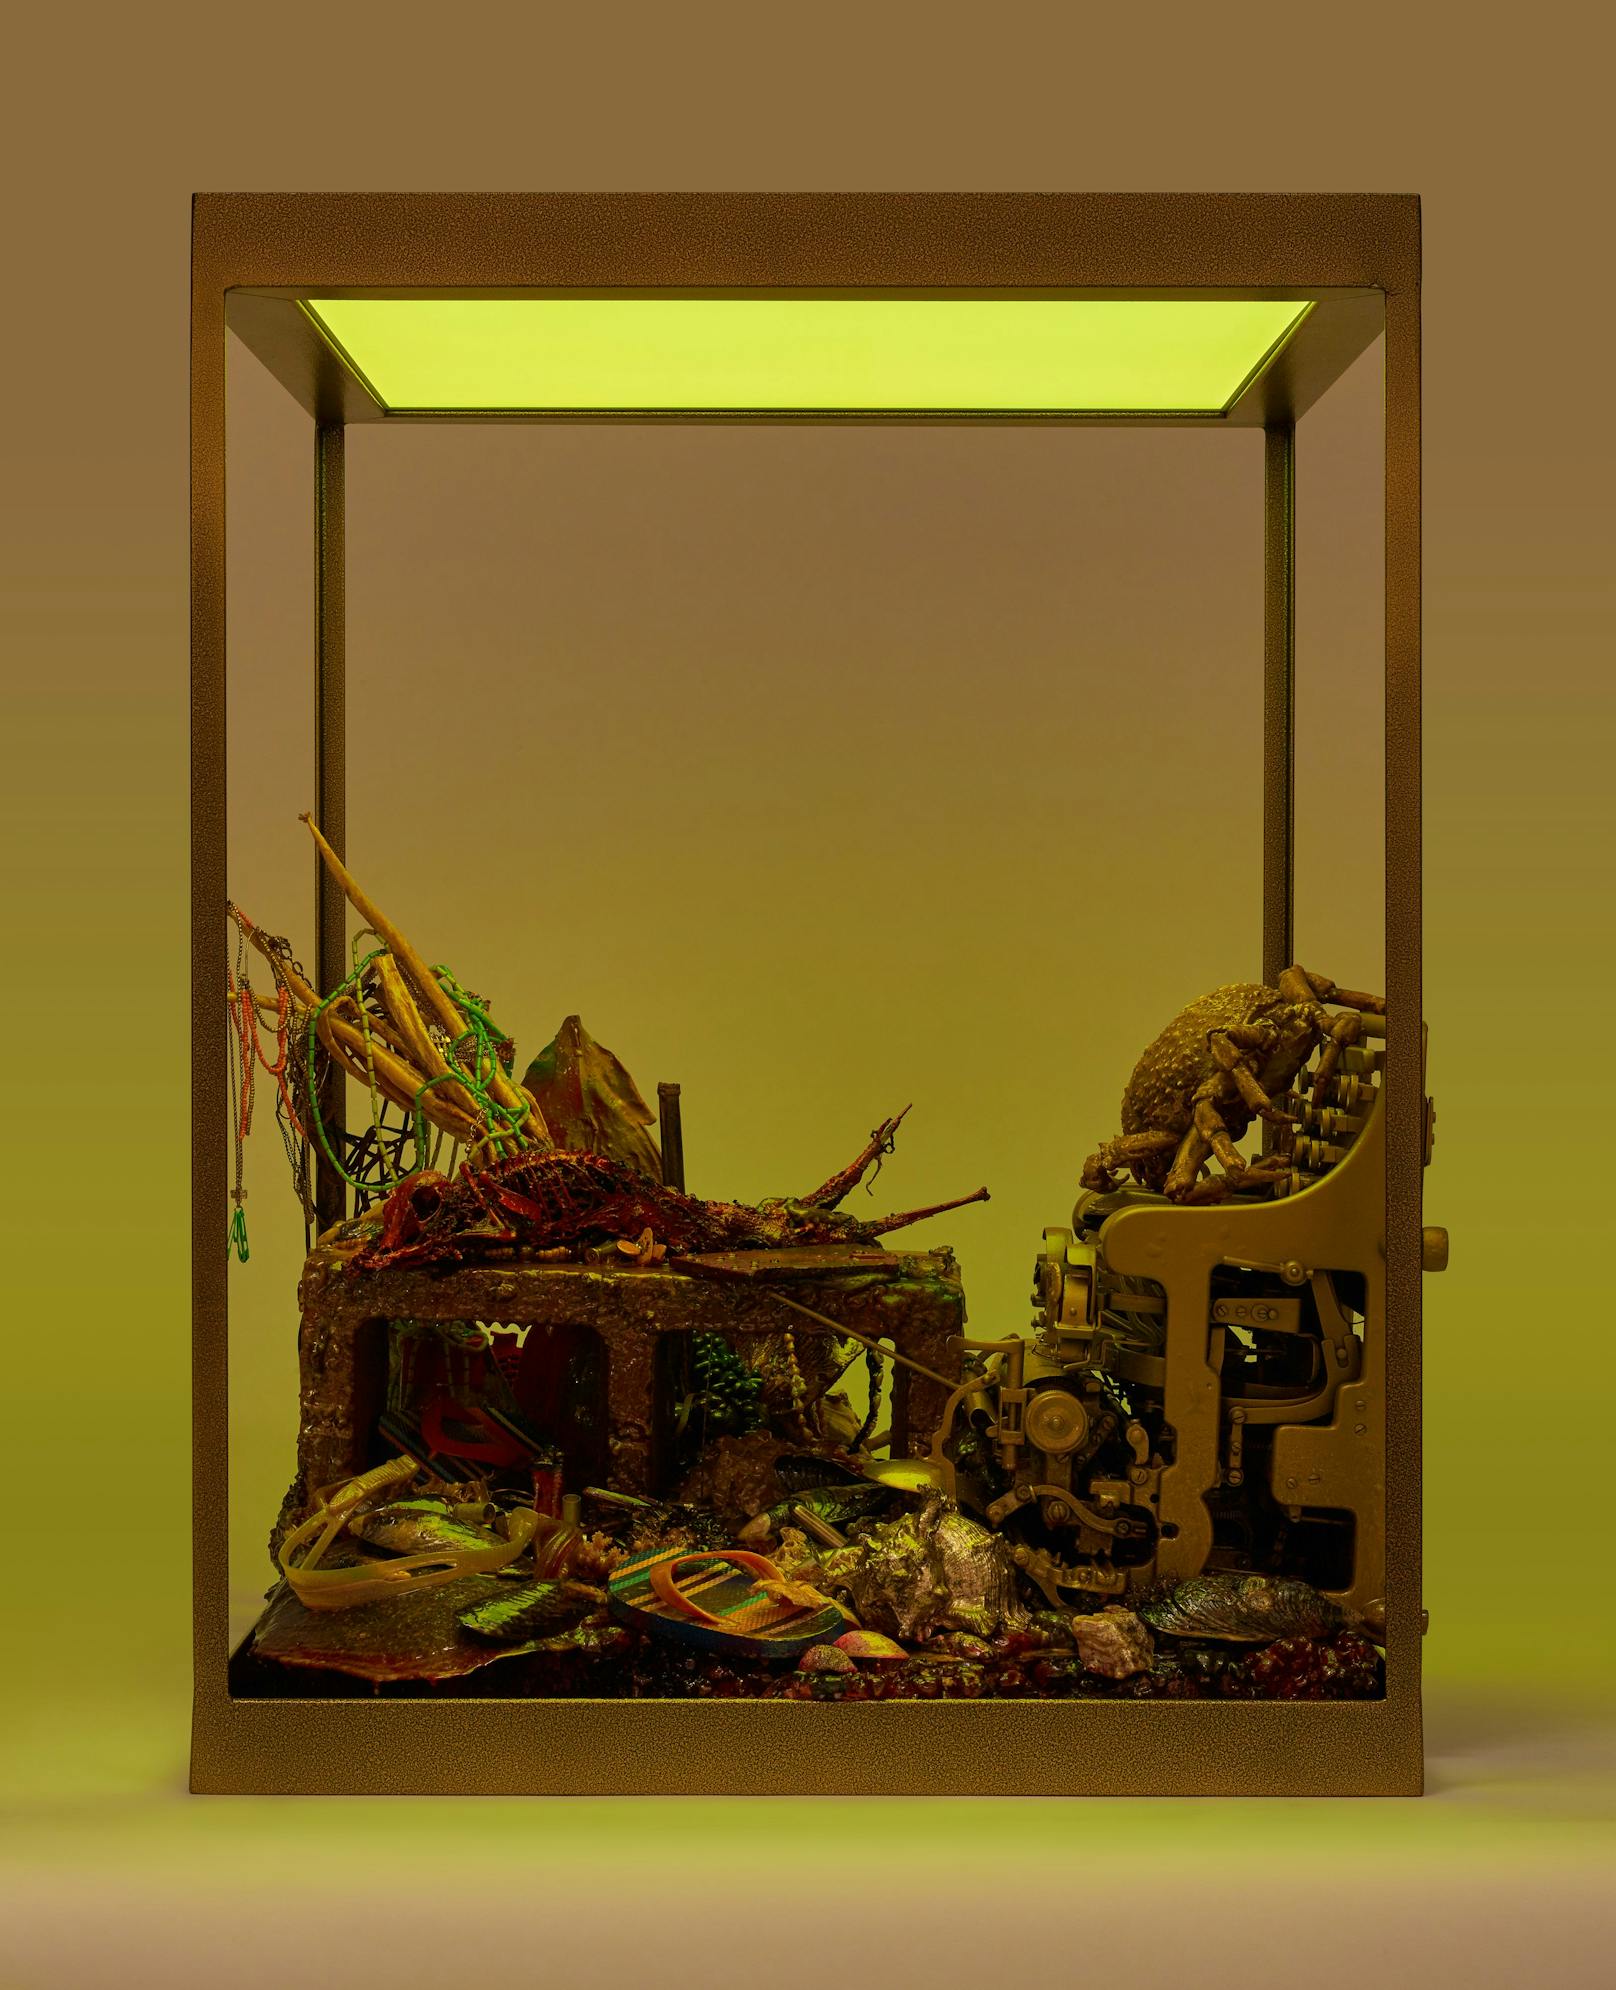 Max Hooper SchneiderDross Vanitas (Yellow), 2019Metal, frame , LED panel, Epoxy Preservative, imported detritus and found matter86 x 66 x 66 cm